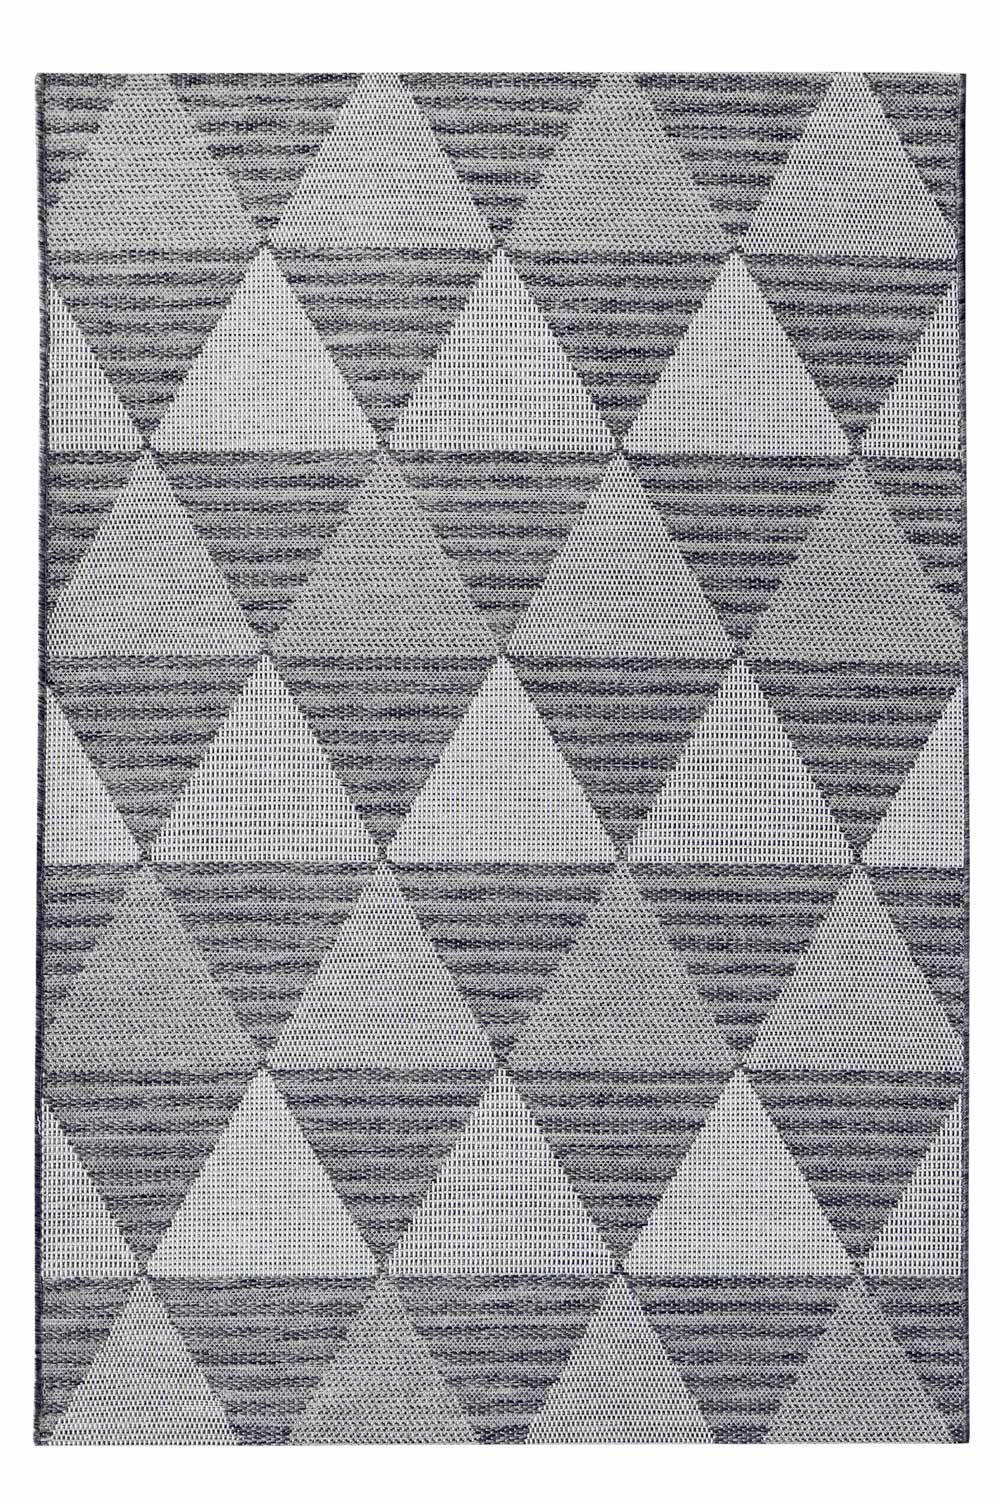 Kusový koberec Flat 21132 Ivory Silver/Taupe